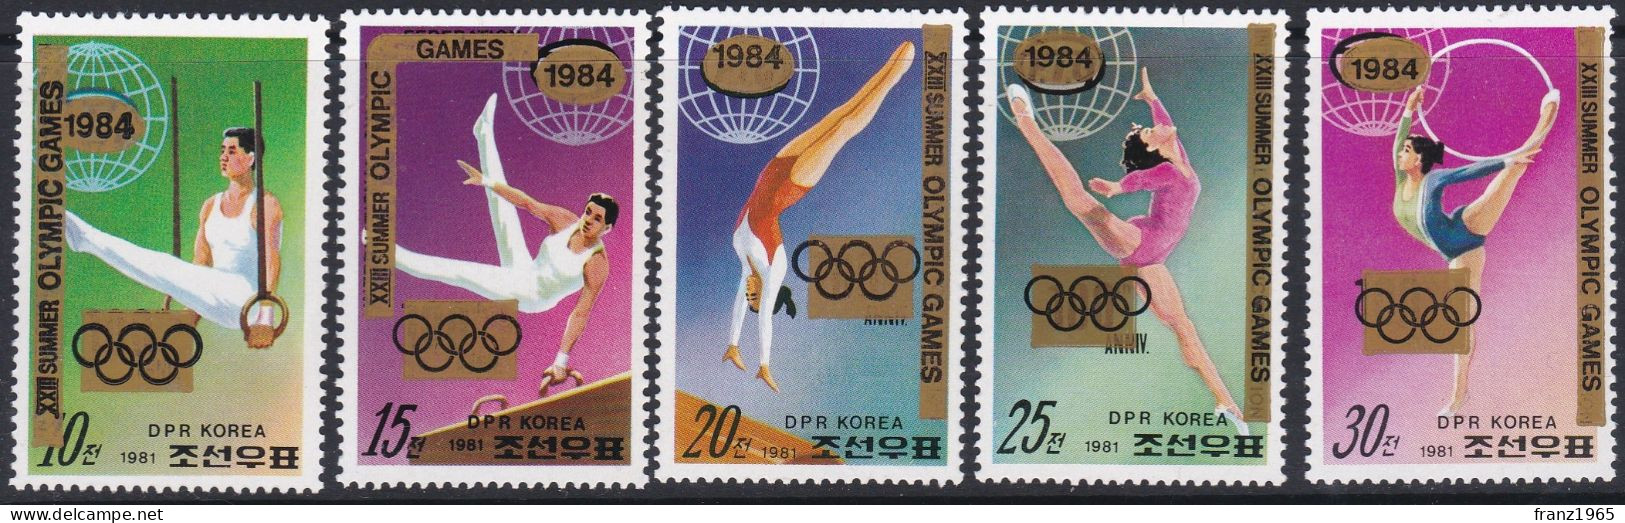 DPR Korea, Olympics Games Los Angeles 1984 - Gymnastics